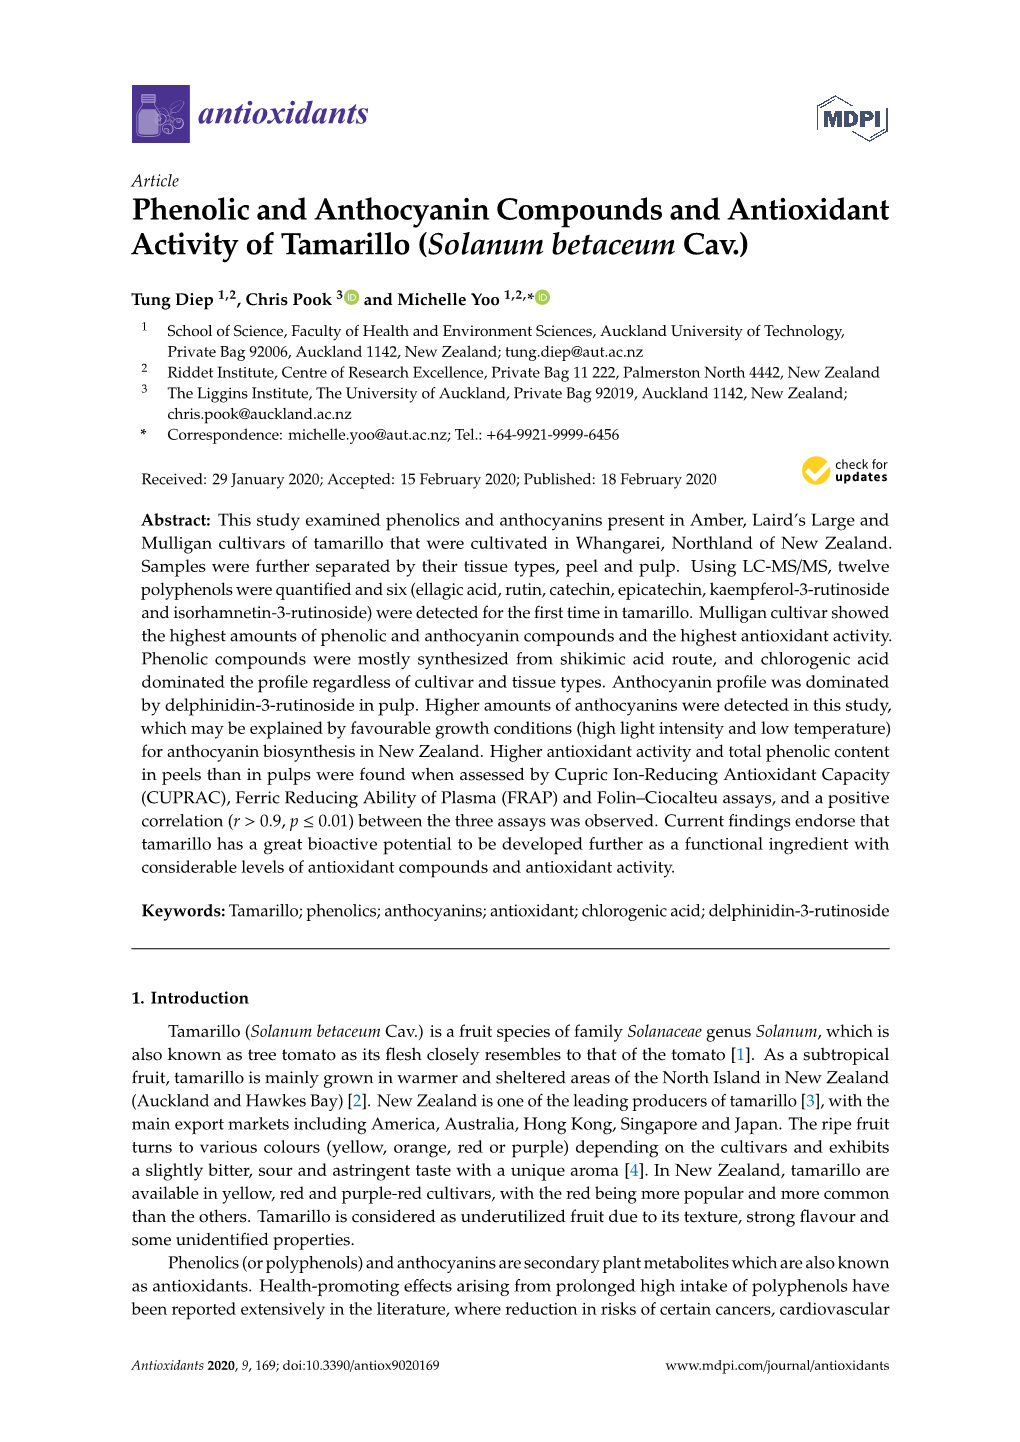 Phenolic and Anthocyanin Compounds and Antioxidant Activity of Tamarillo (Solanum Betaceum Cav.)